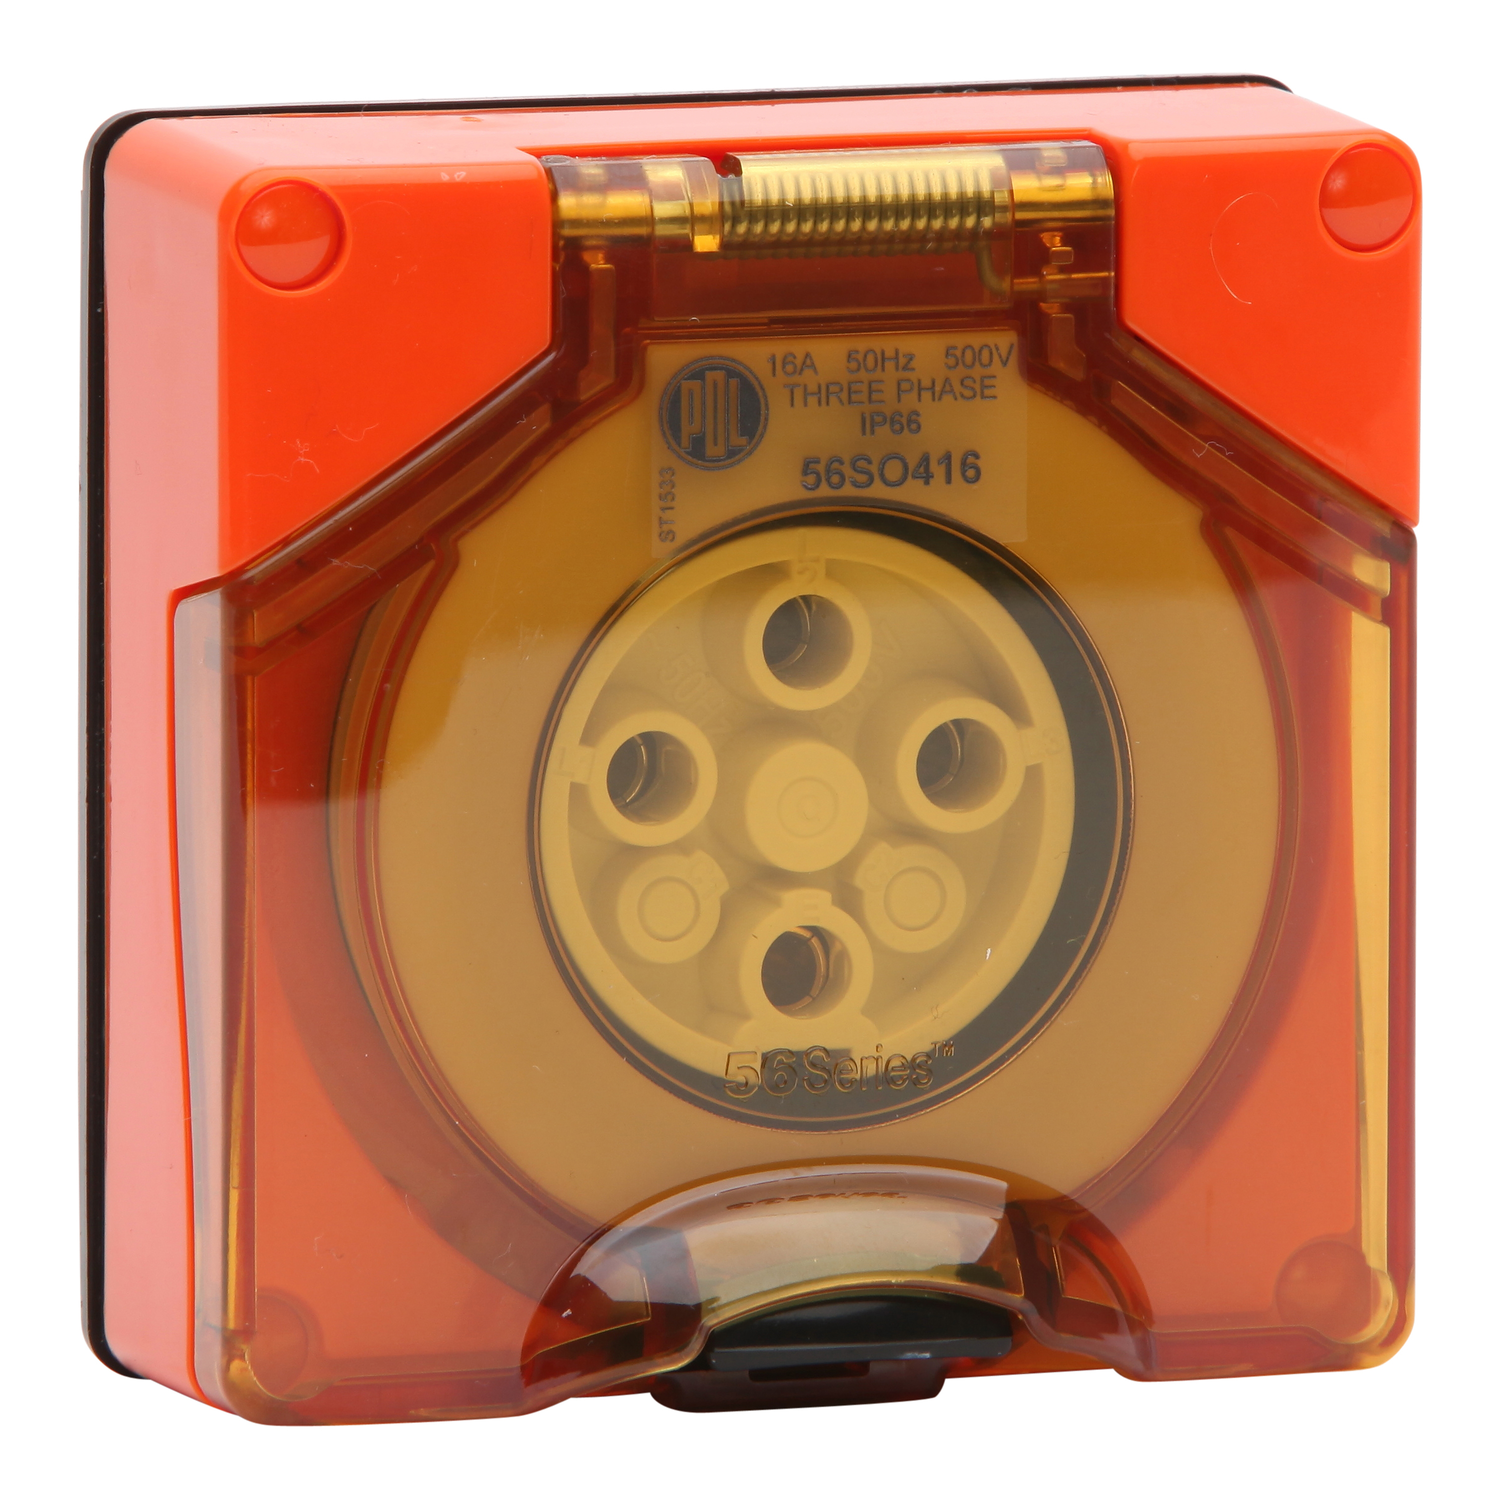 PDL 56 Series - Socket 16A 500V 1-Phase 4-Round Pin IP66 - Chemical-Resistant Orange